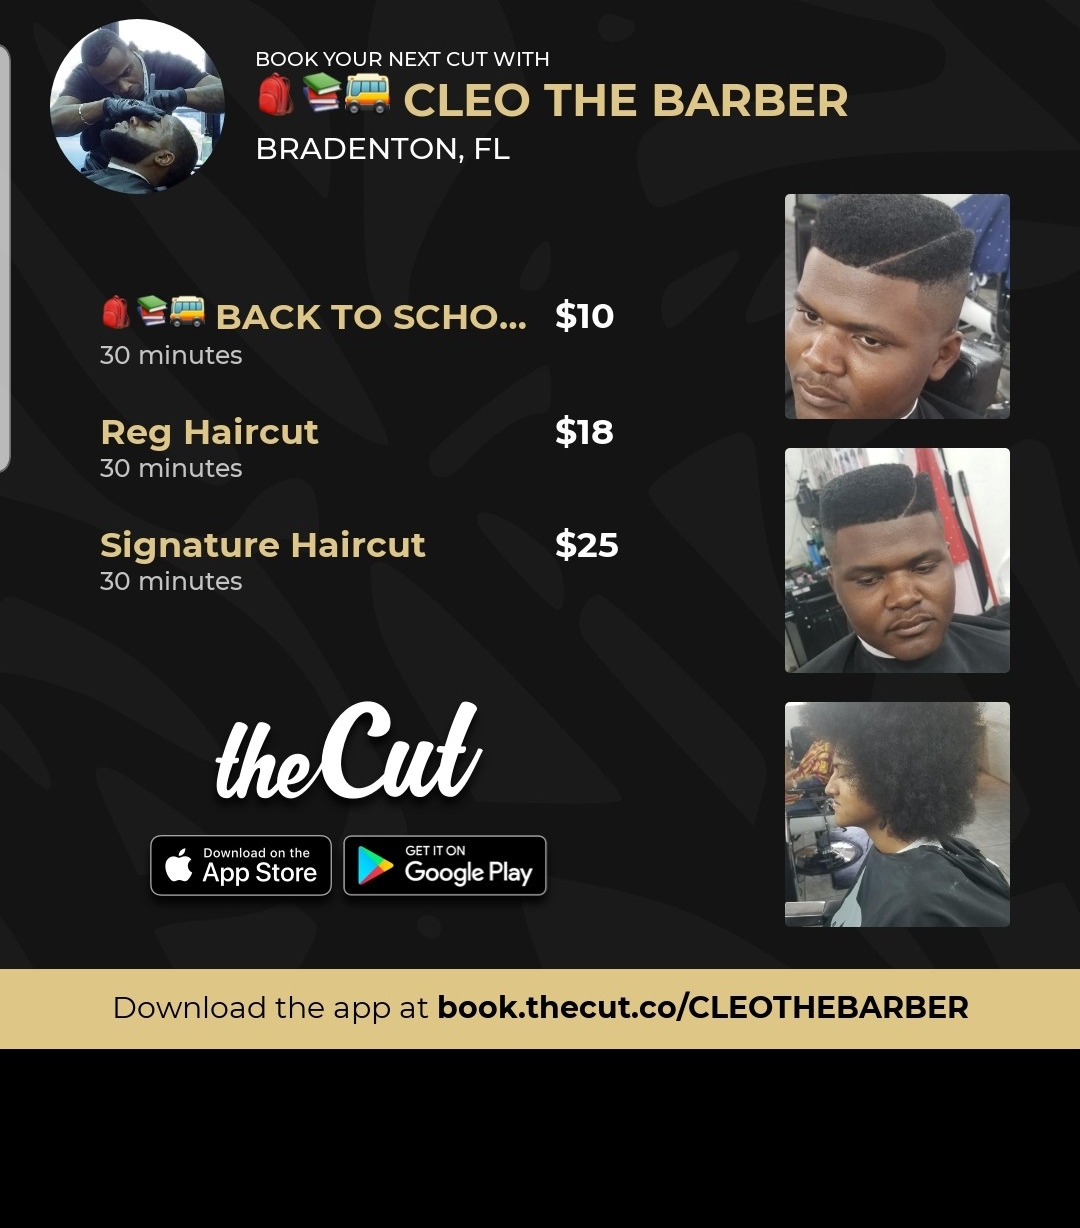 CLEO THE BARBER SVB Barbershop